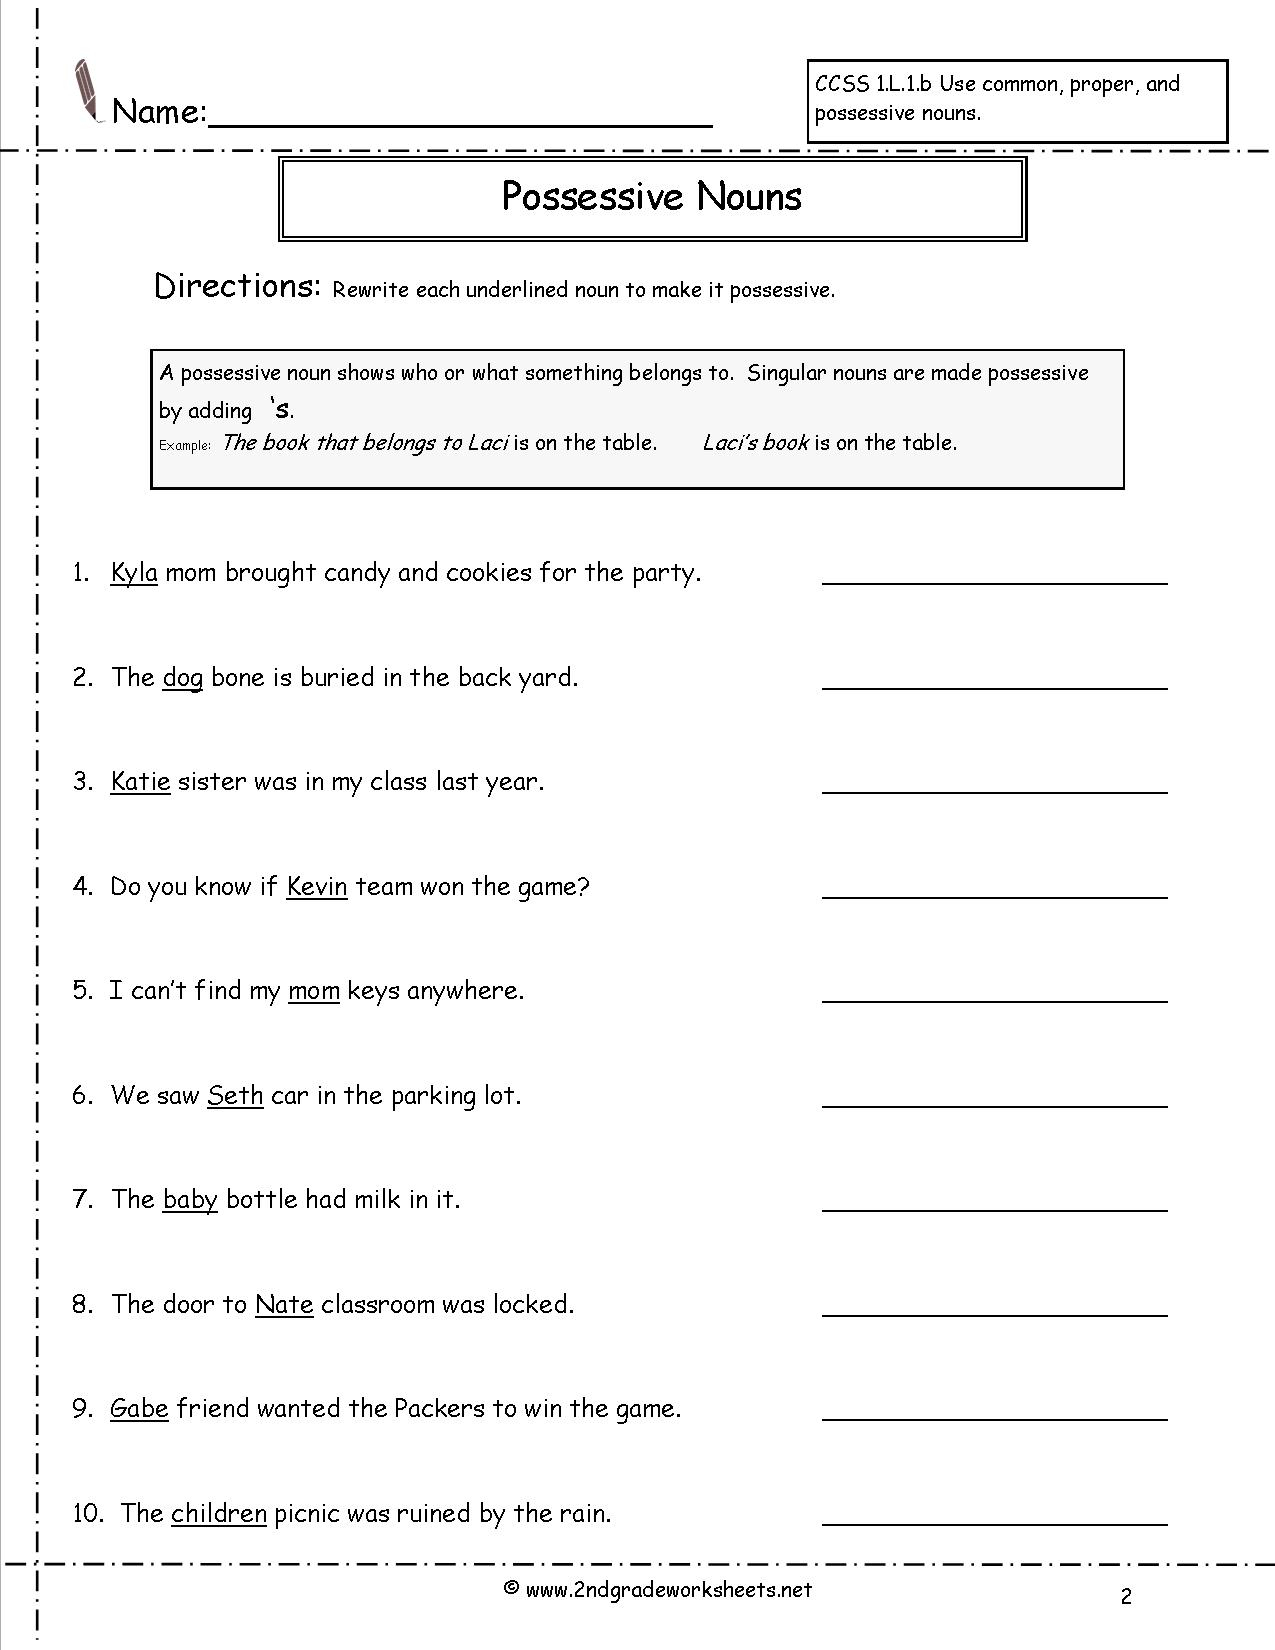 Second Grade Possessive Nouns Worksheets